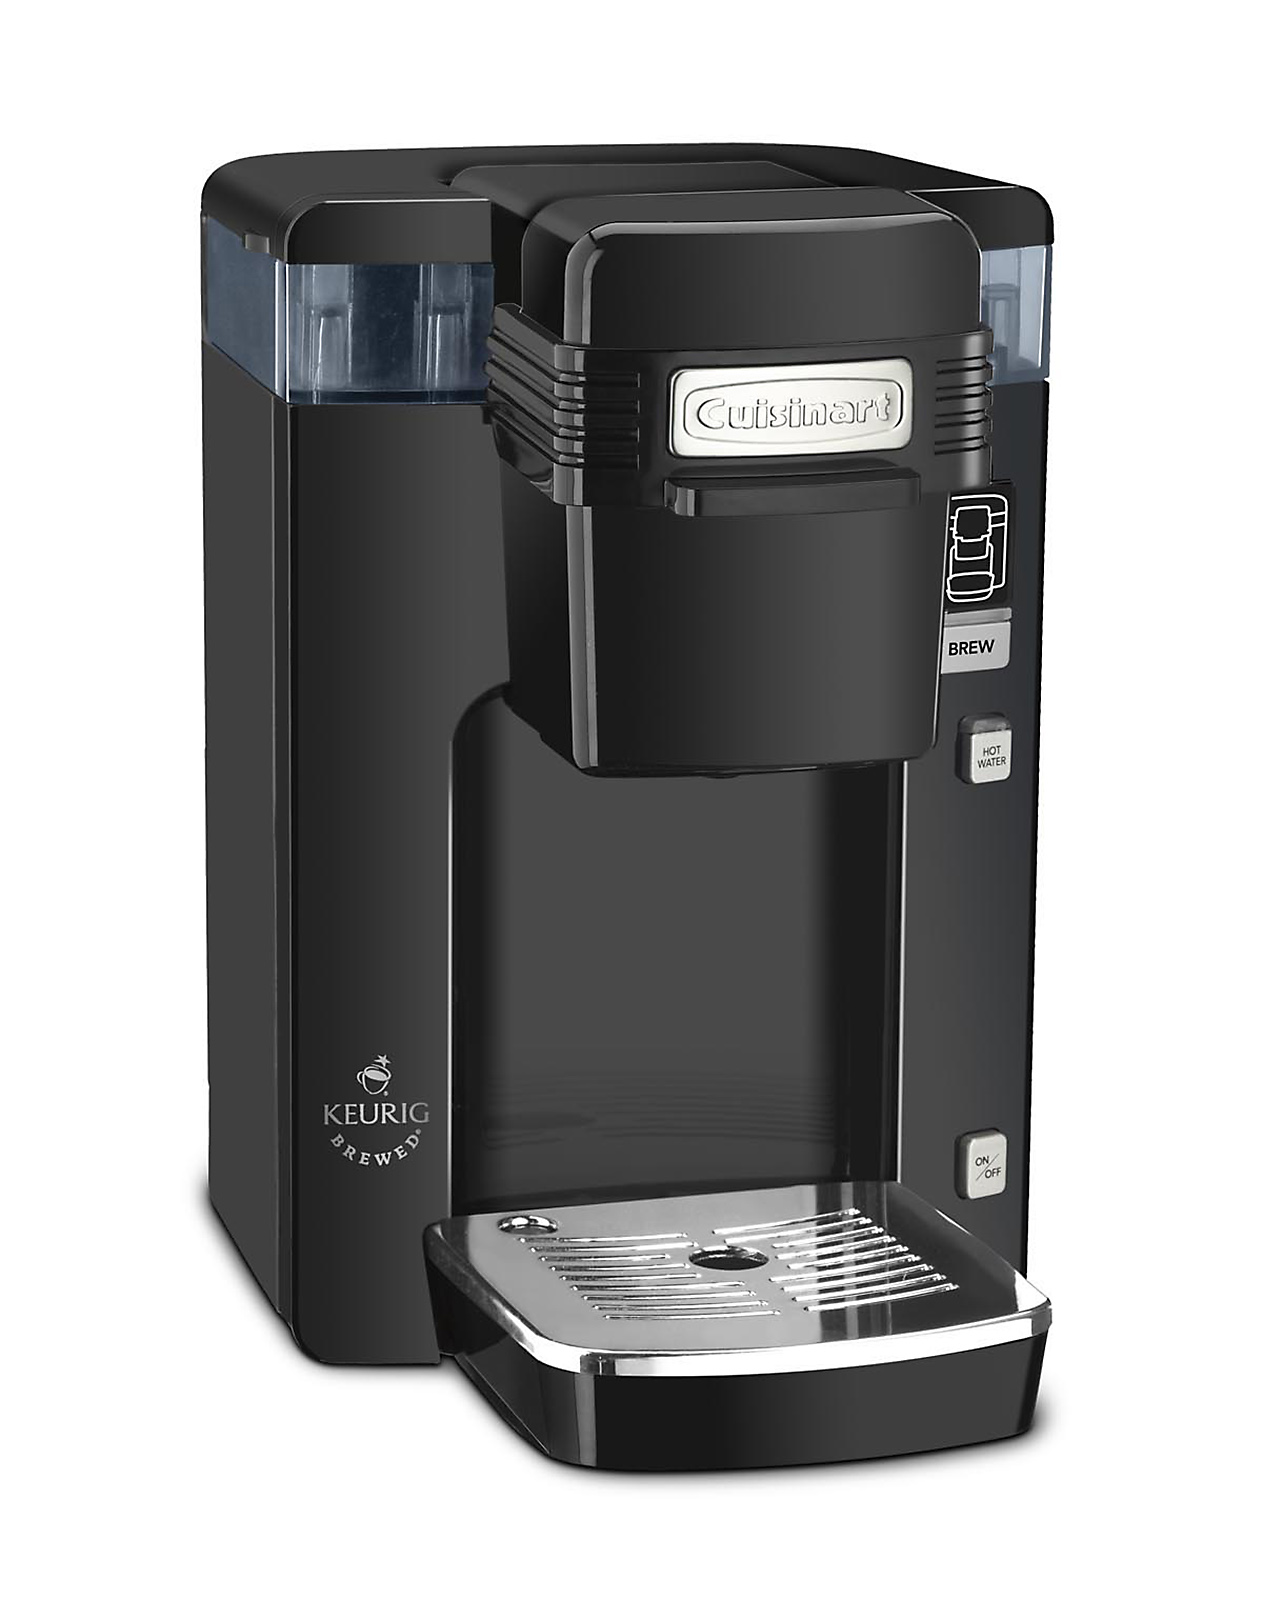 Cuisinart SS-300BK Compact Single Serve Coffee Maker Black